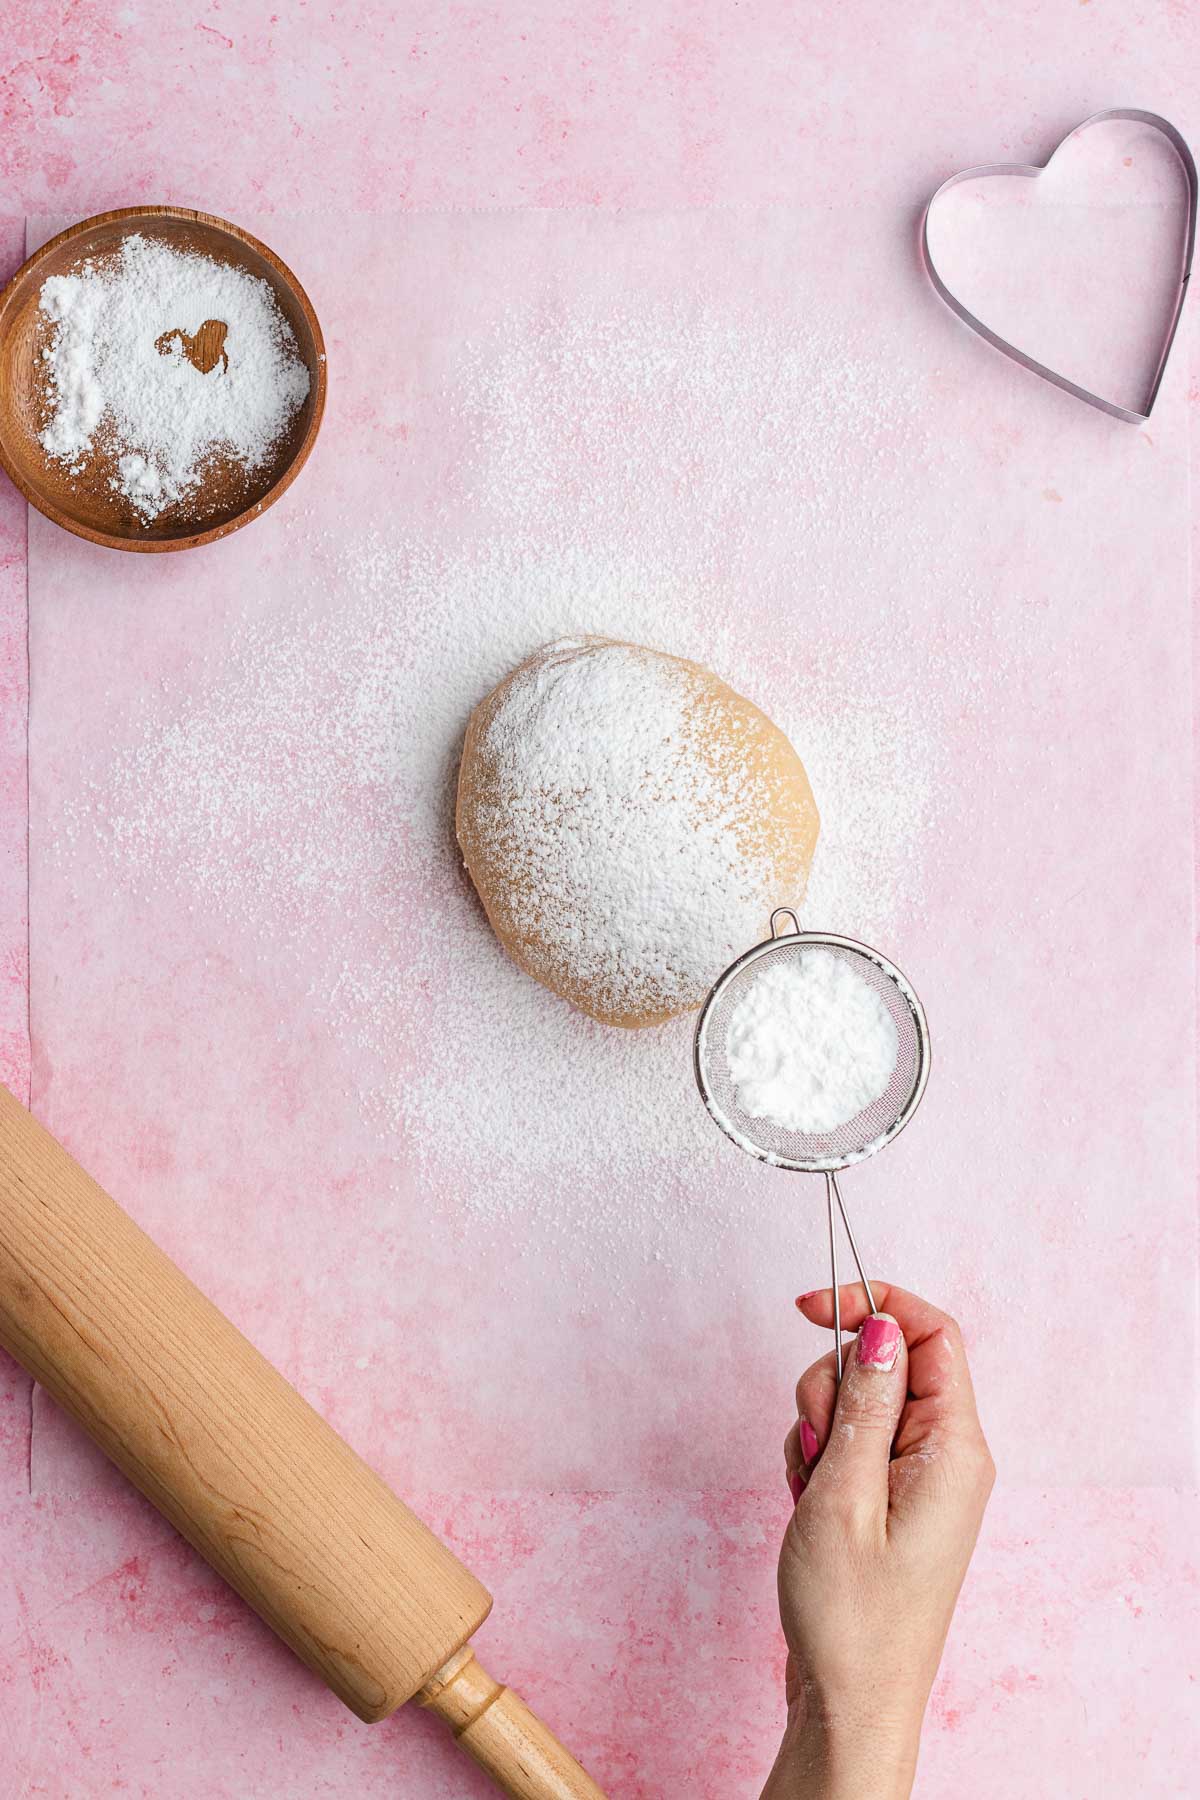 dusting dough with powdered sugar